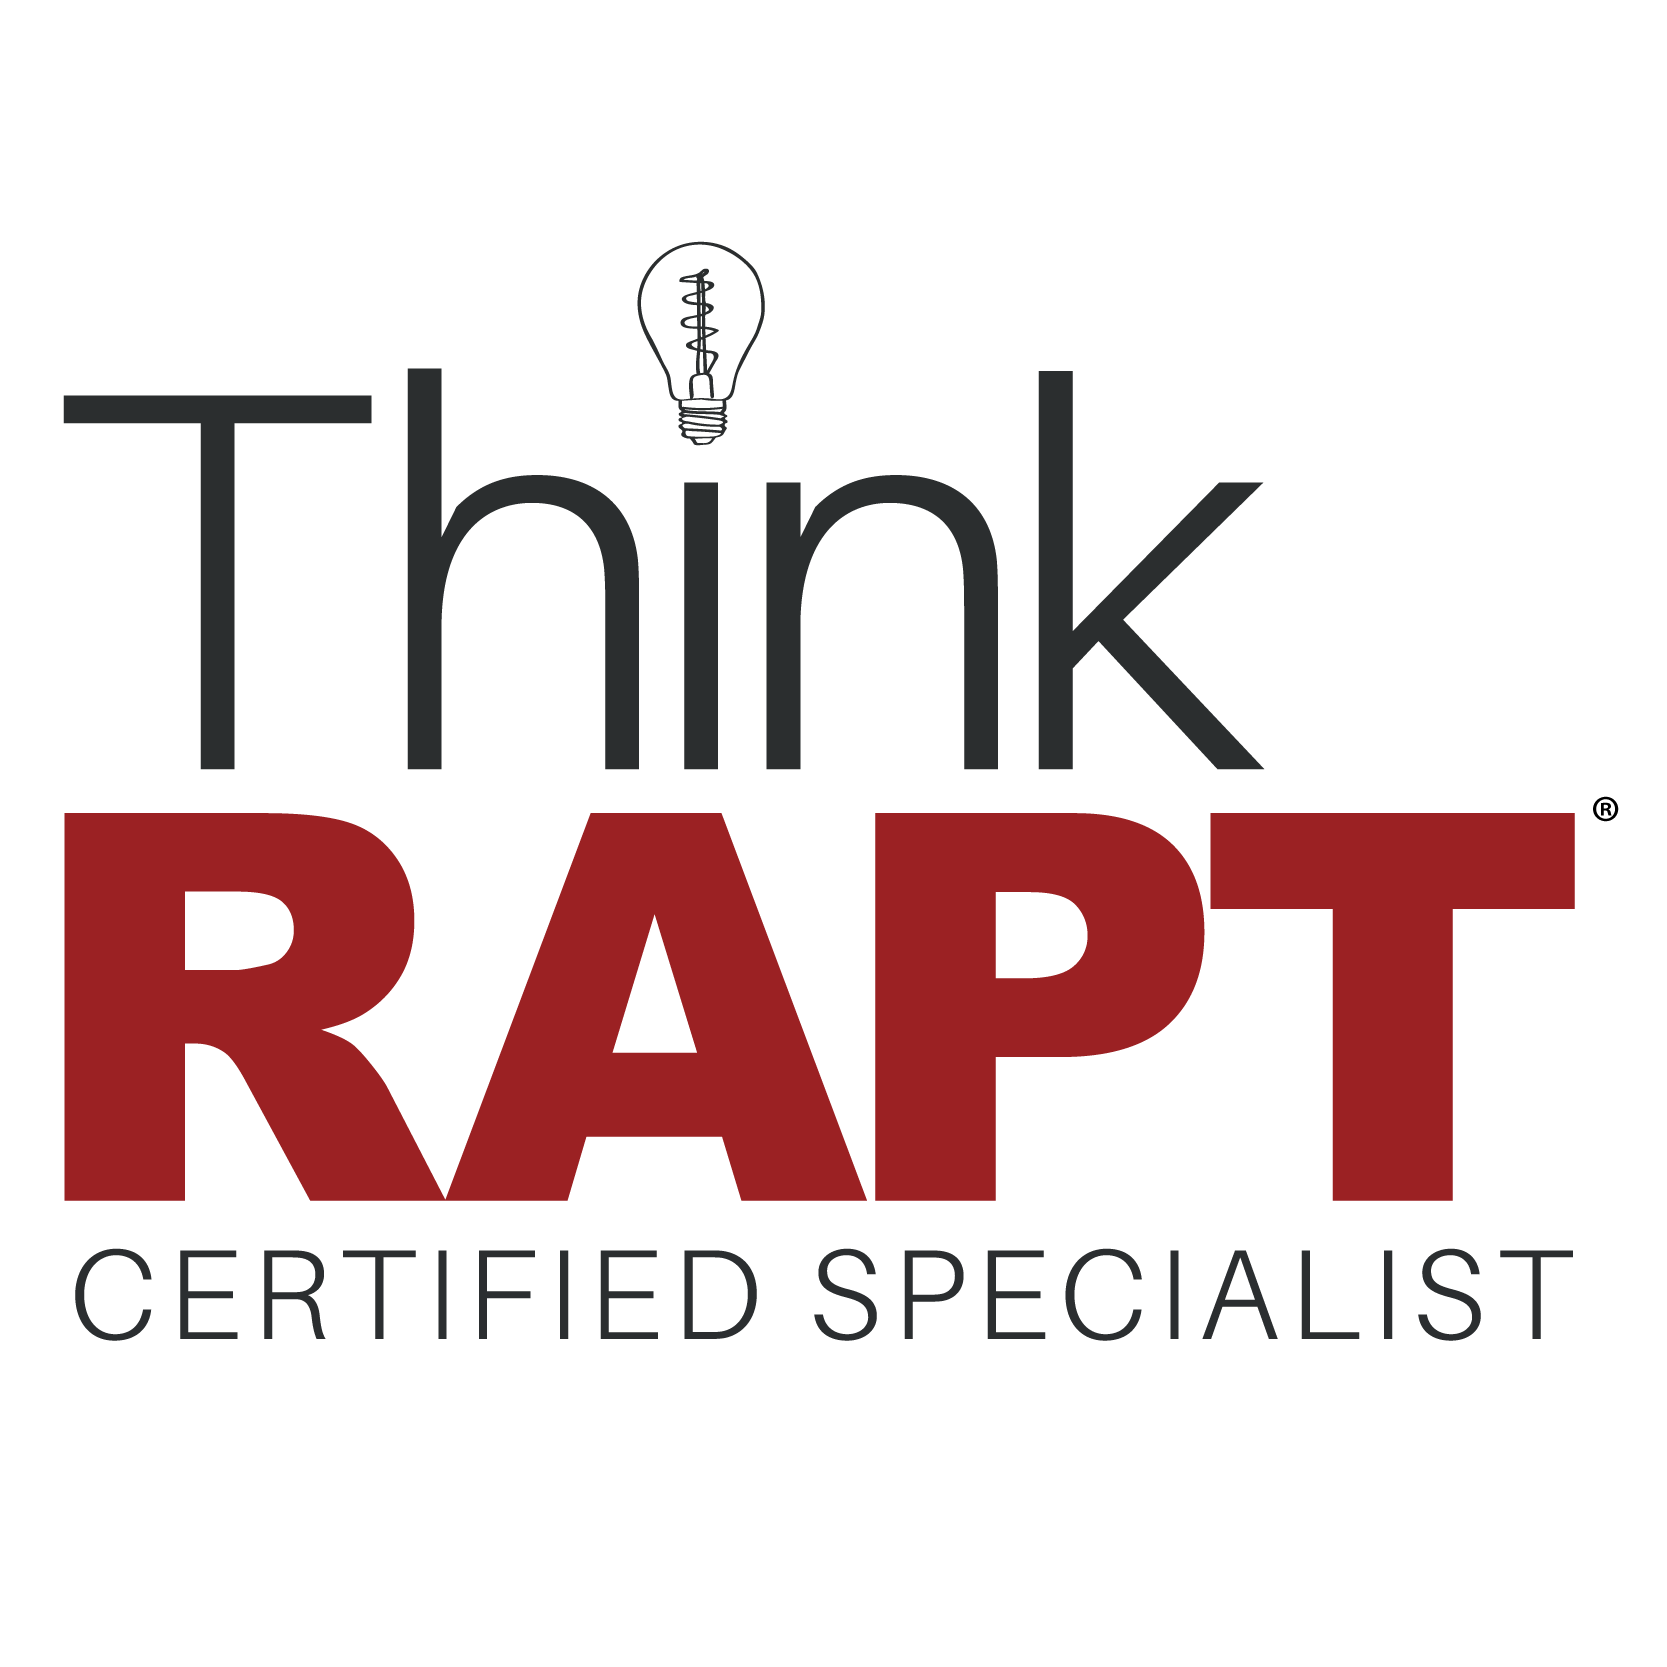 ThinkRapt Certified Specialist Katrina Johnson NewSky Consulting